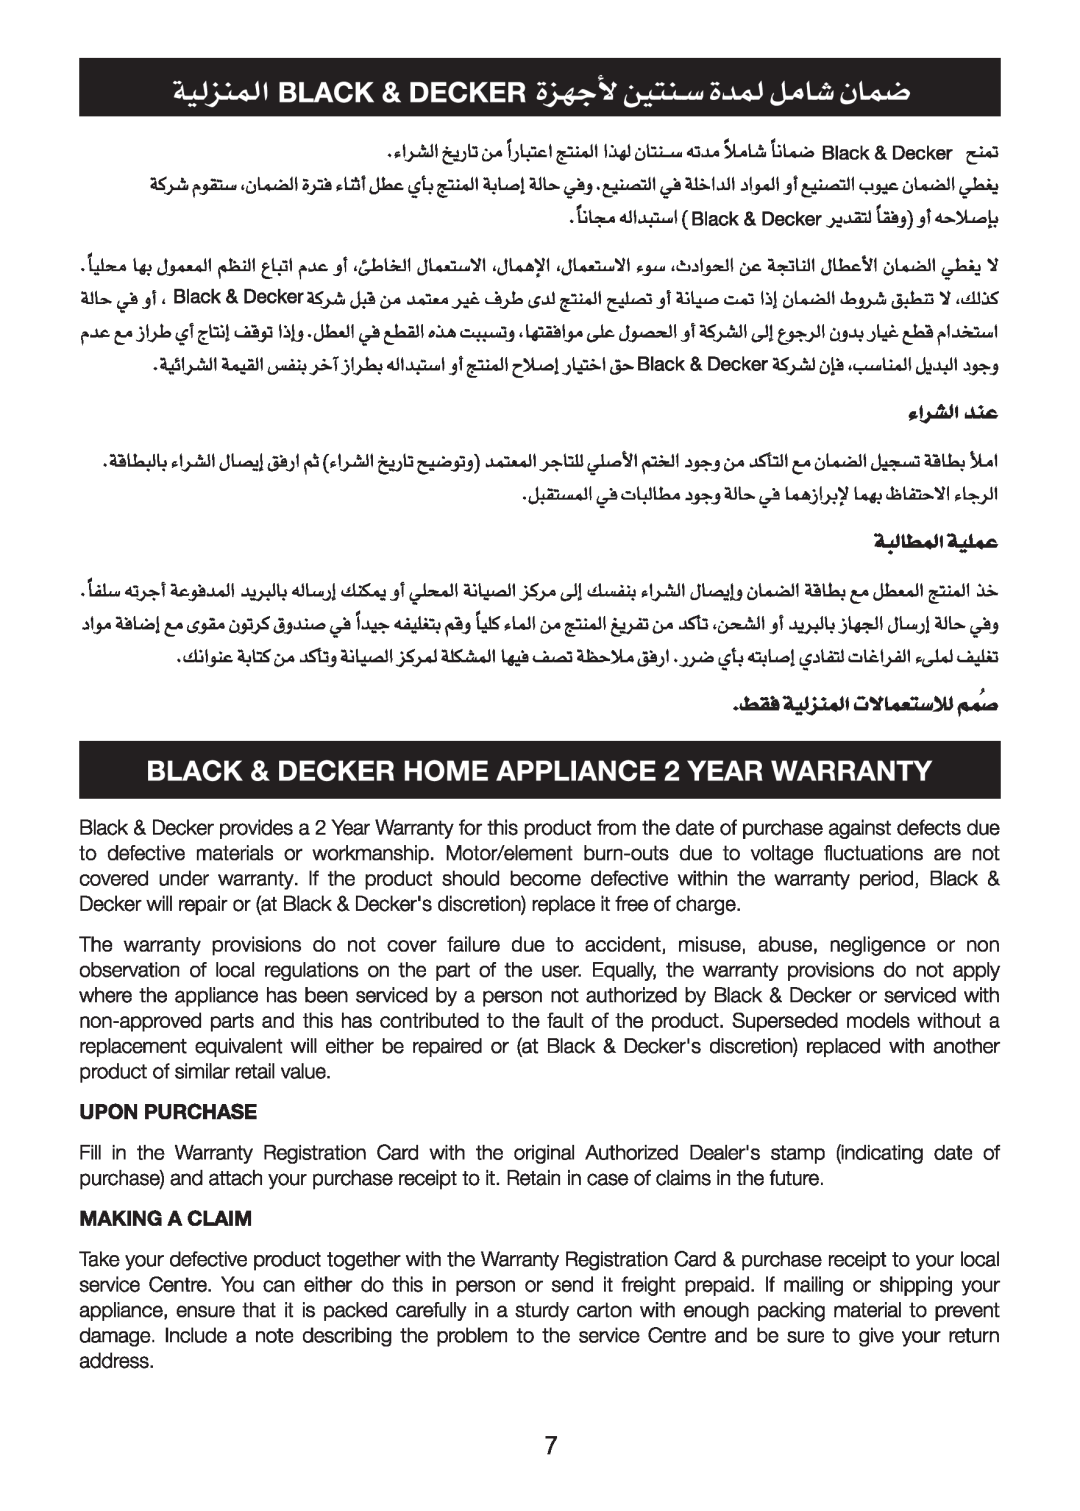 Black & Decker TS7O manual 